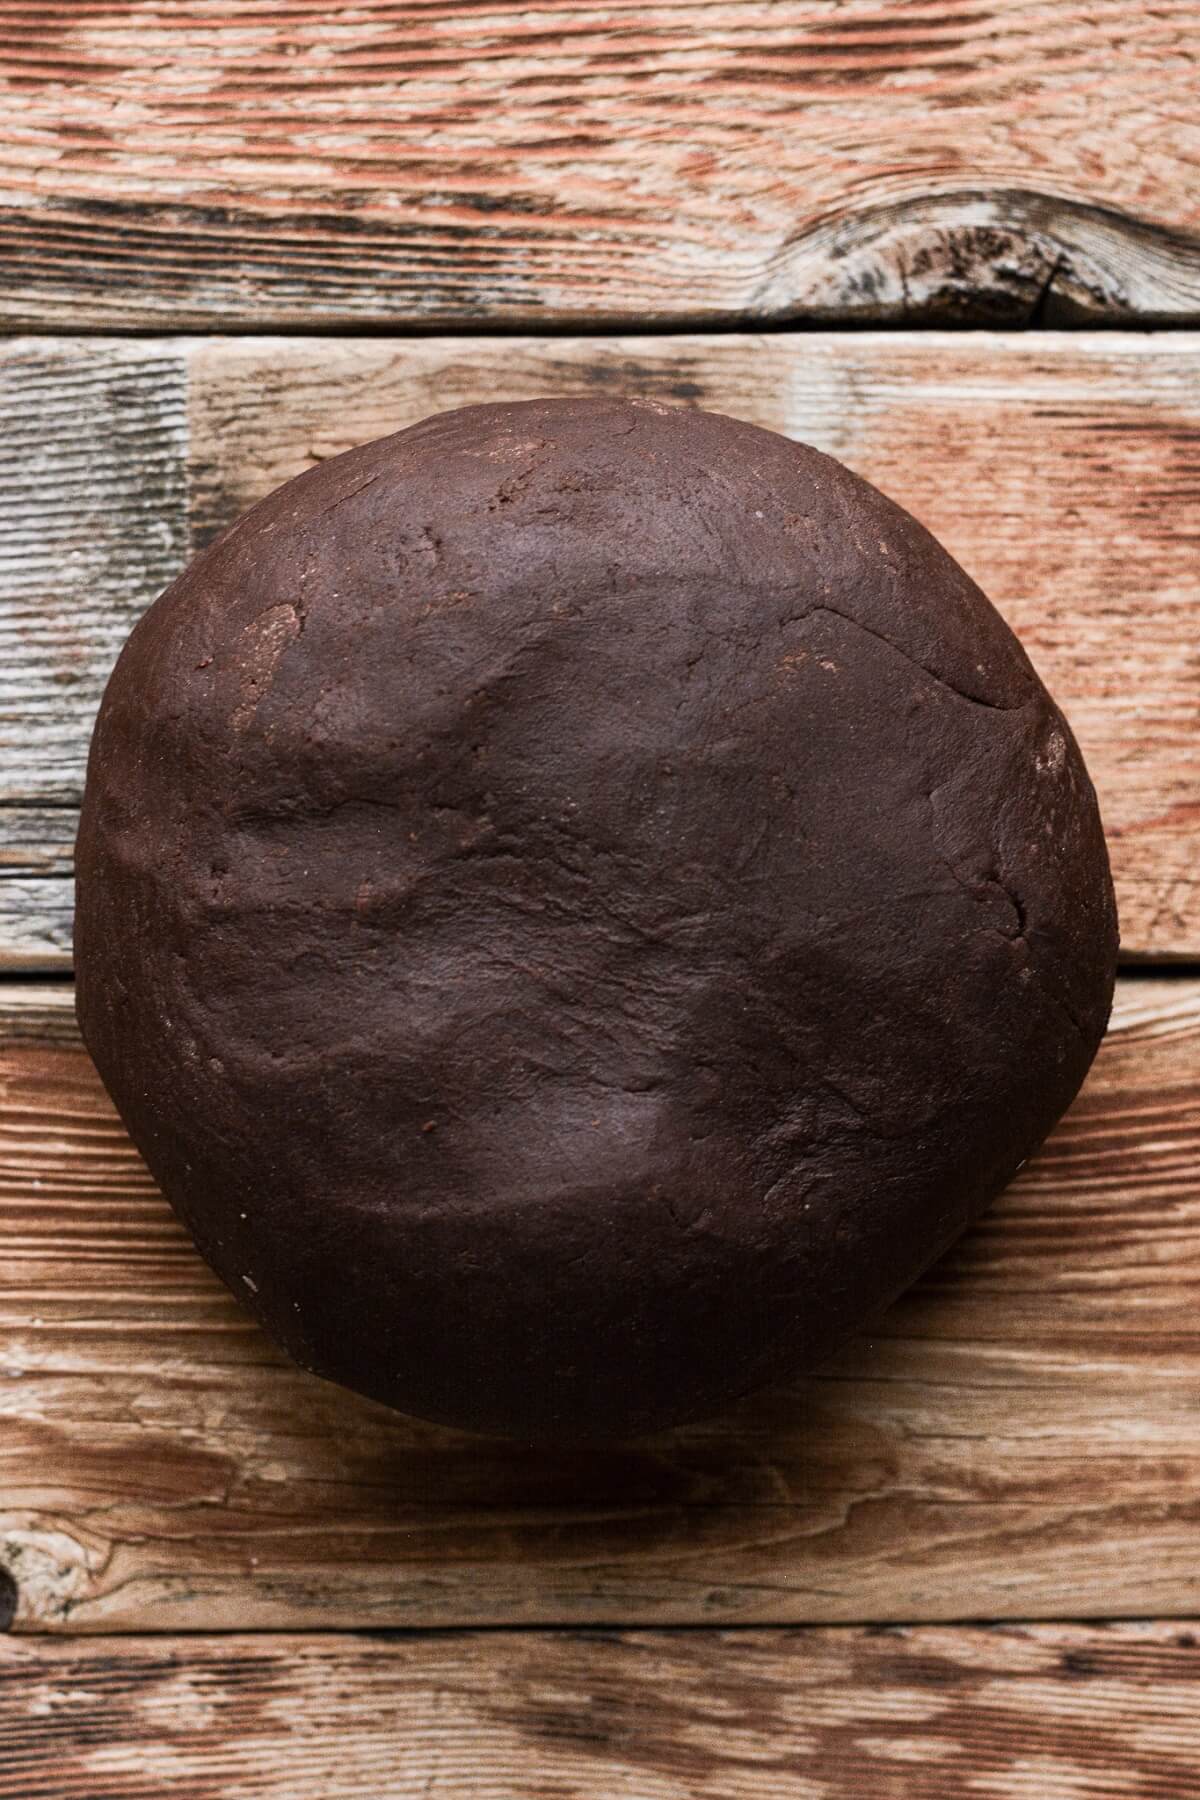 Chocolate cookie dough.